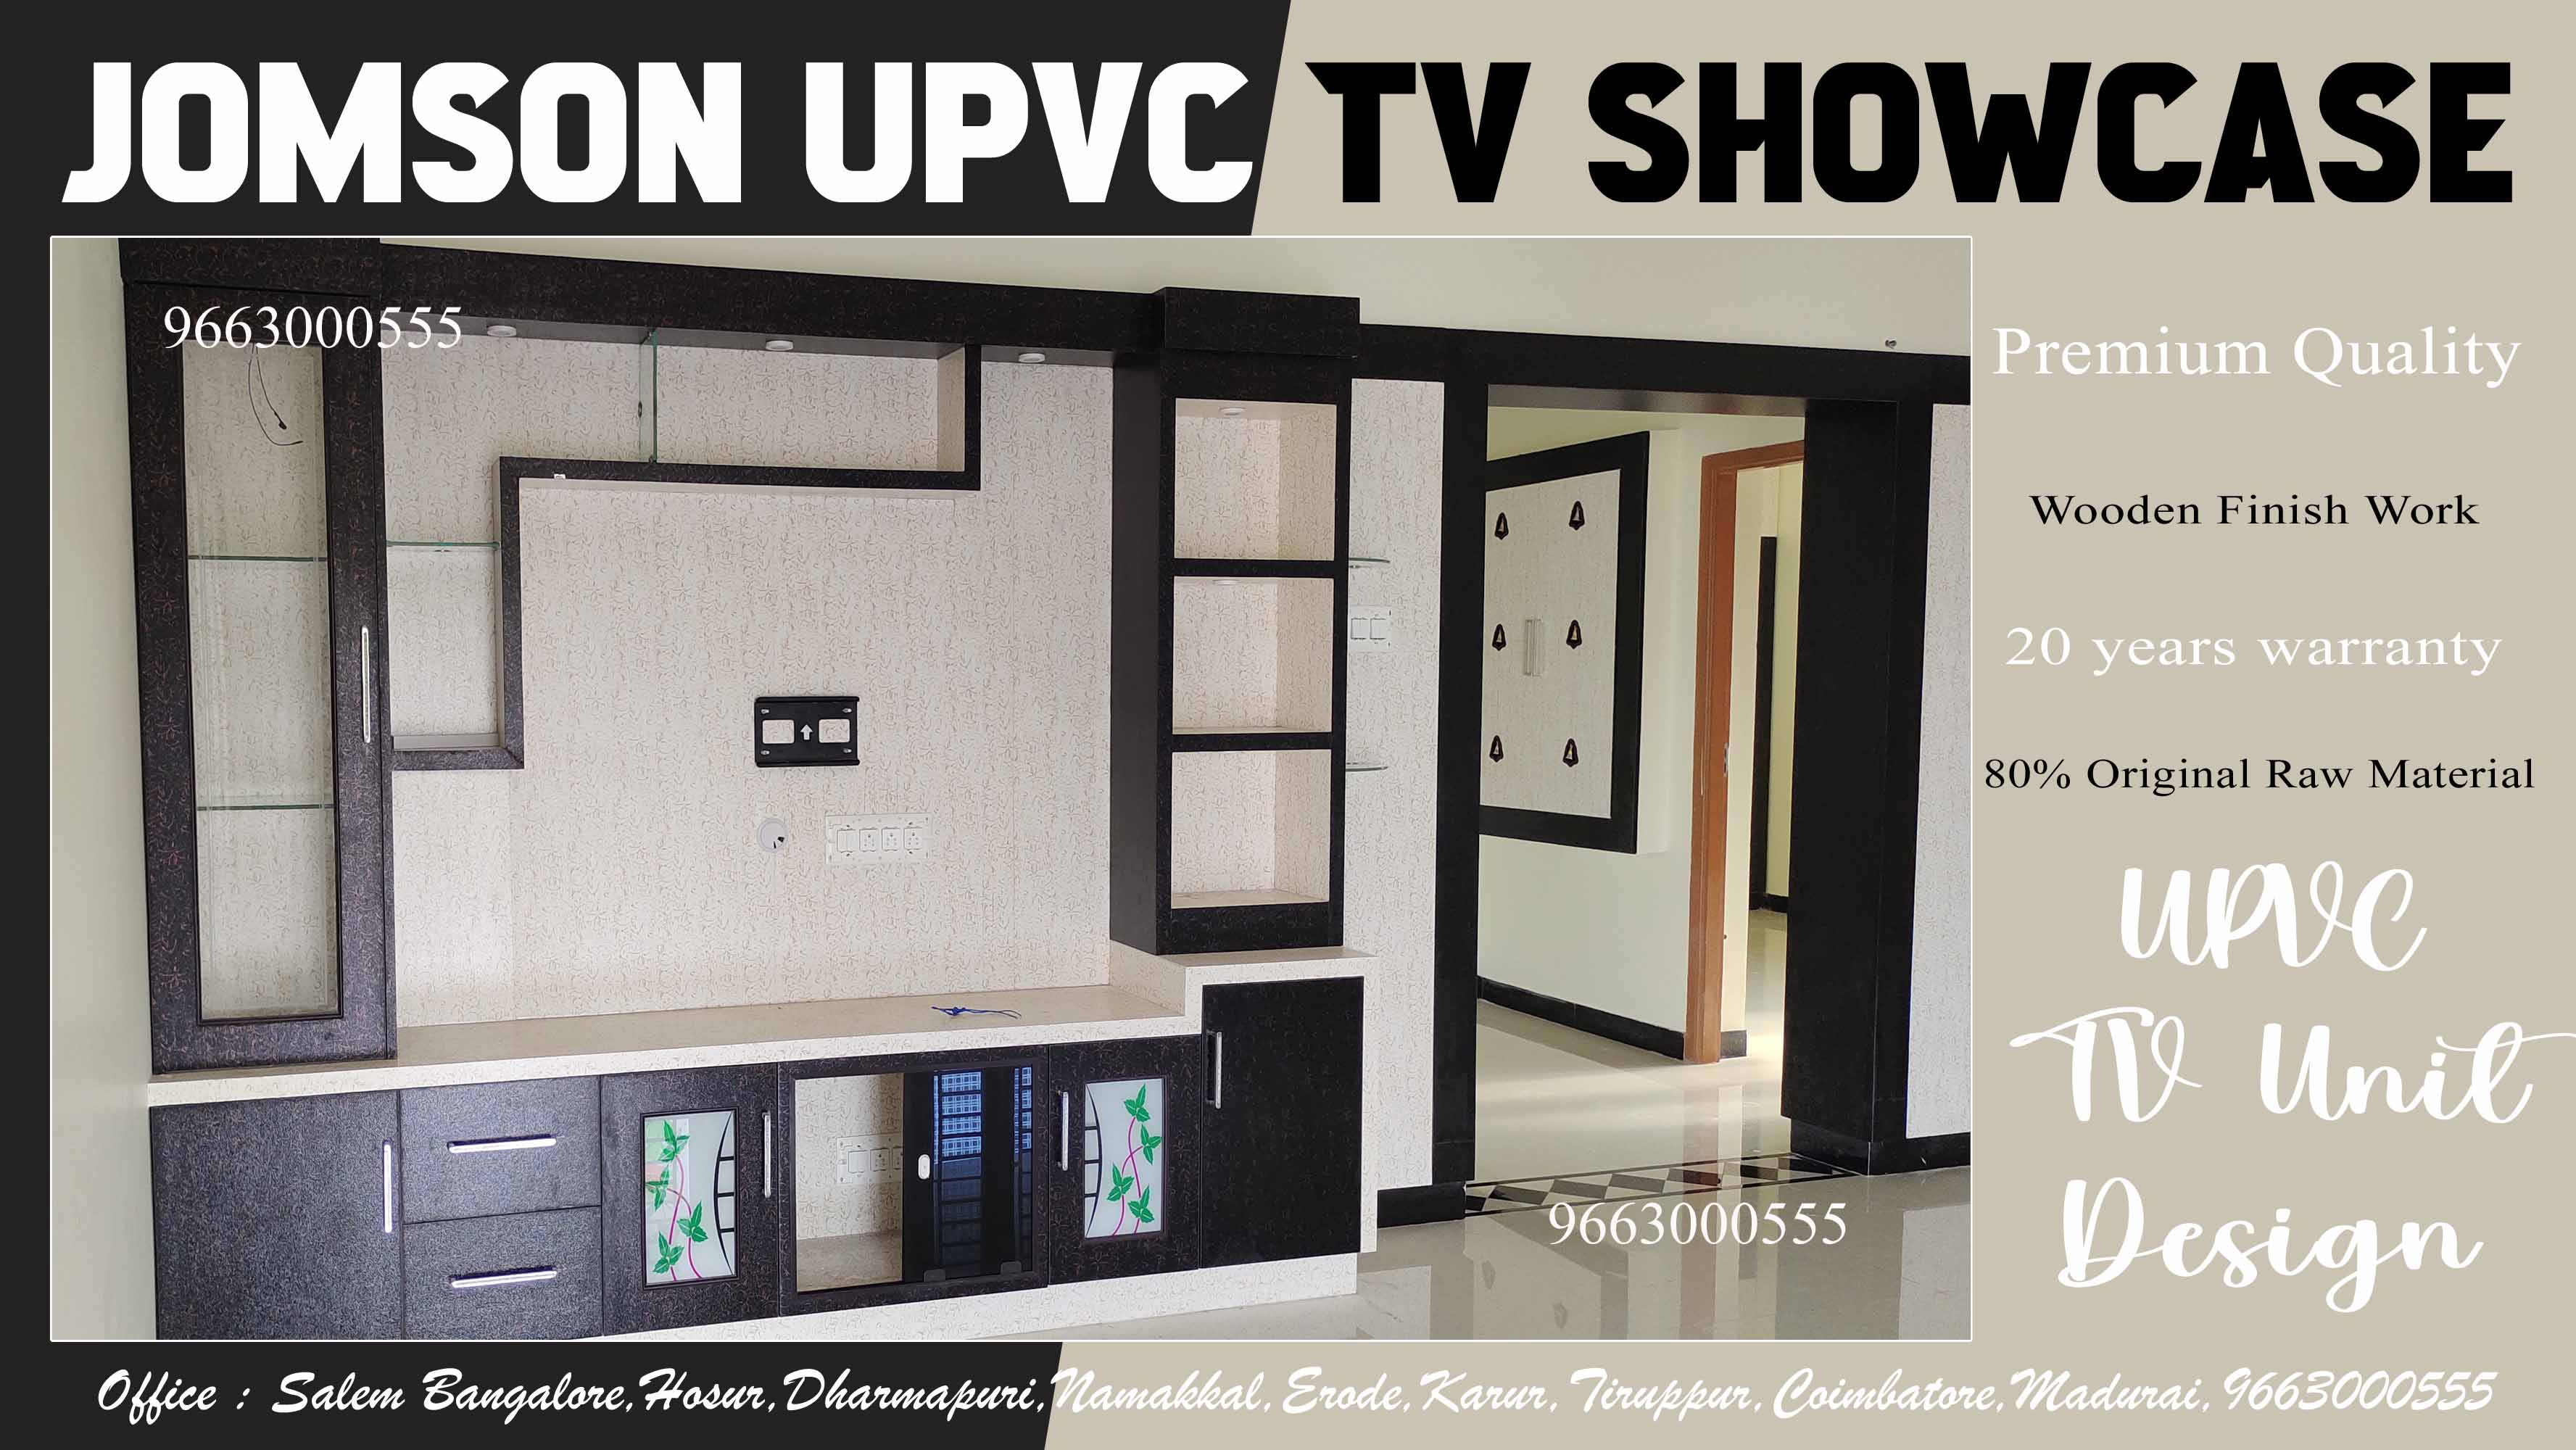 upvc tv showcase design